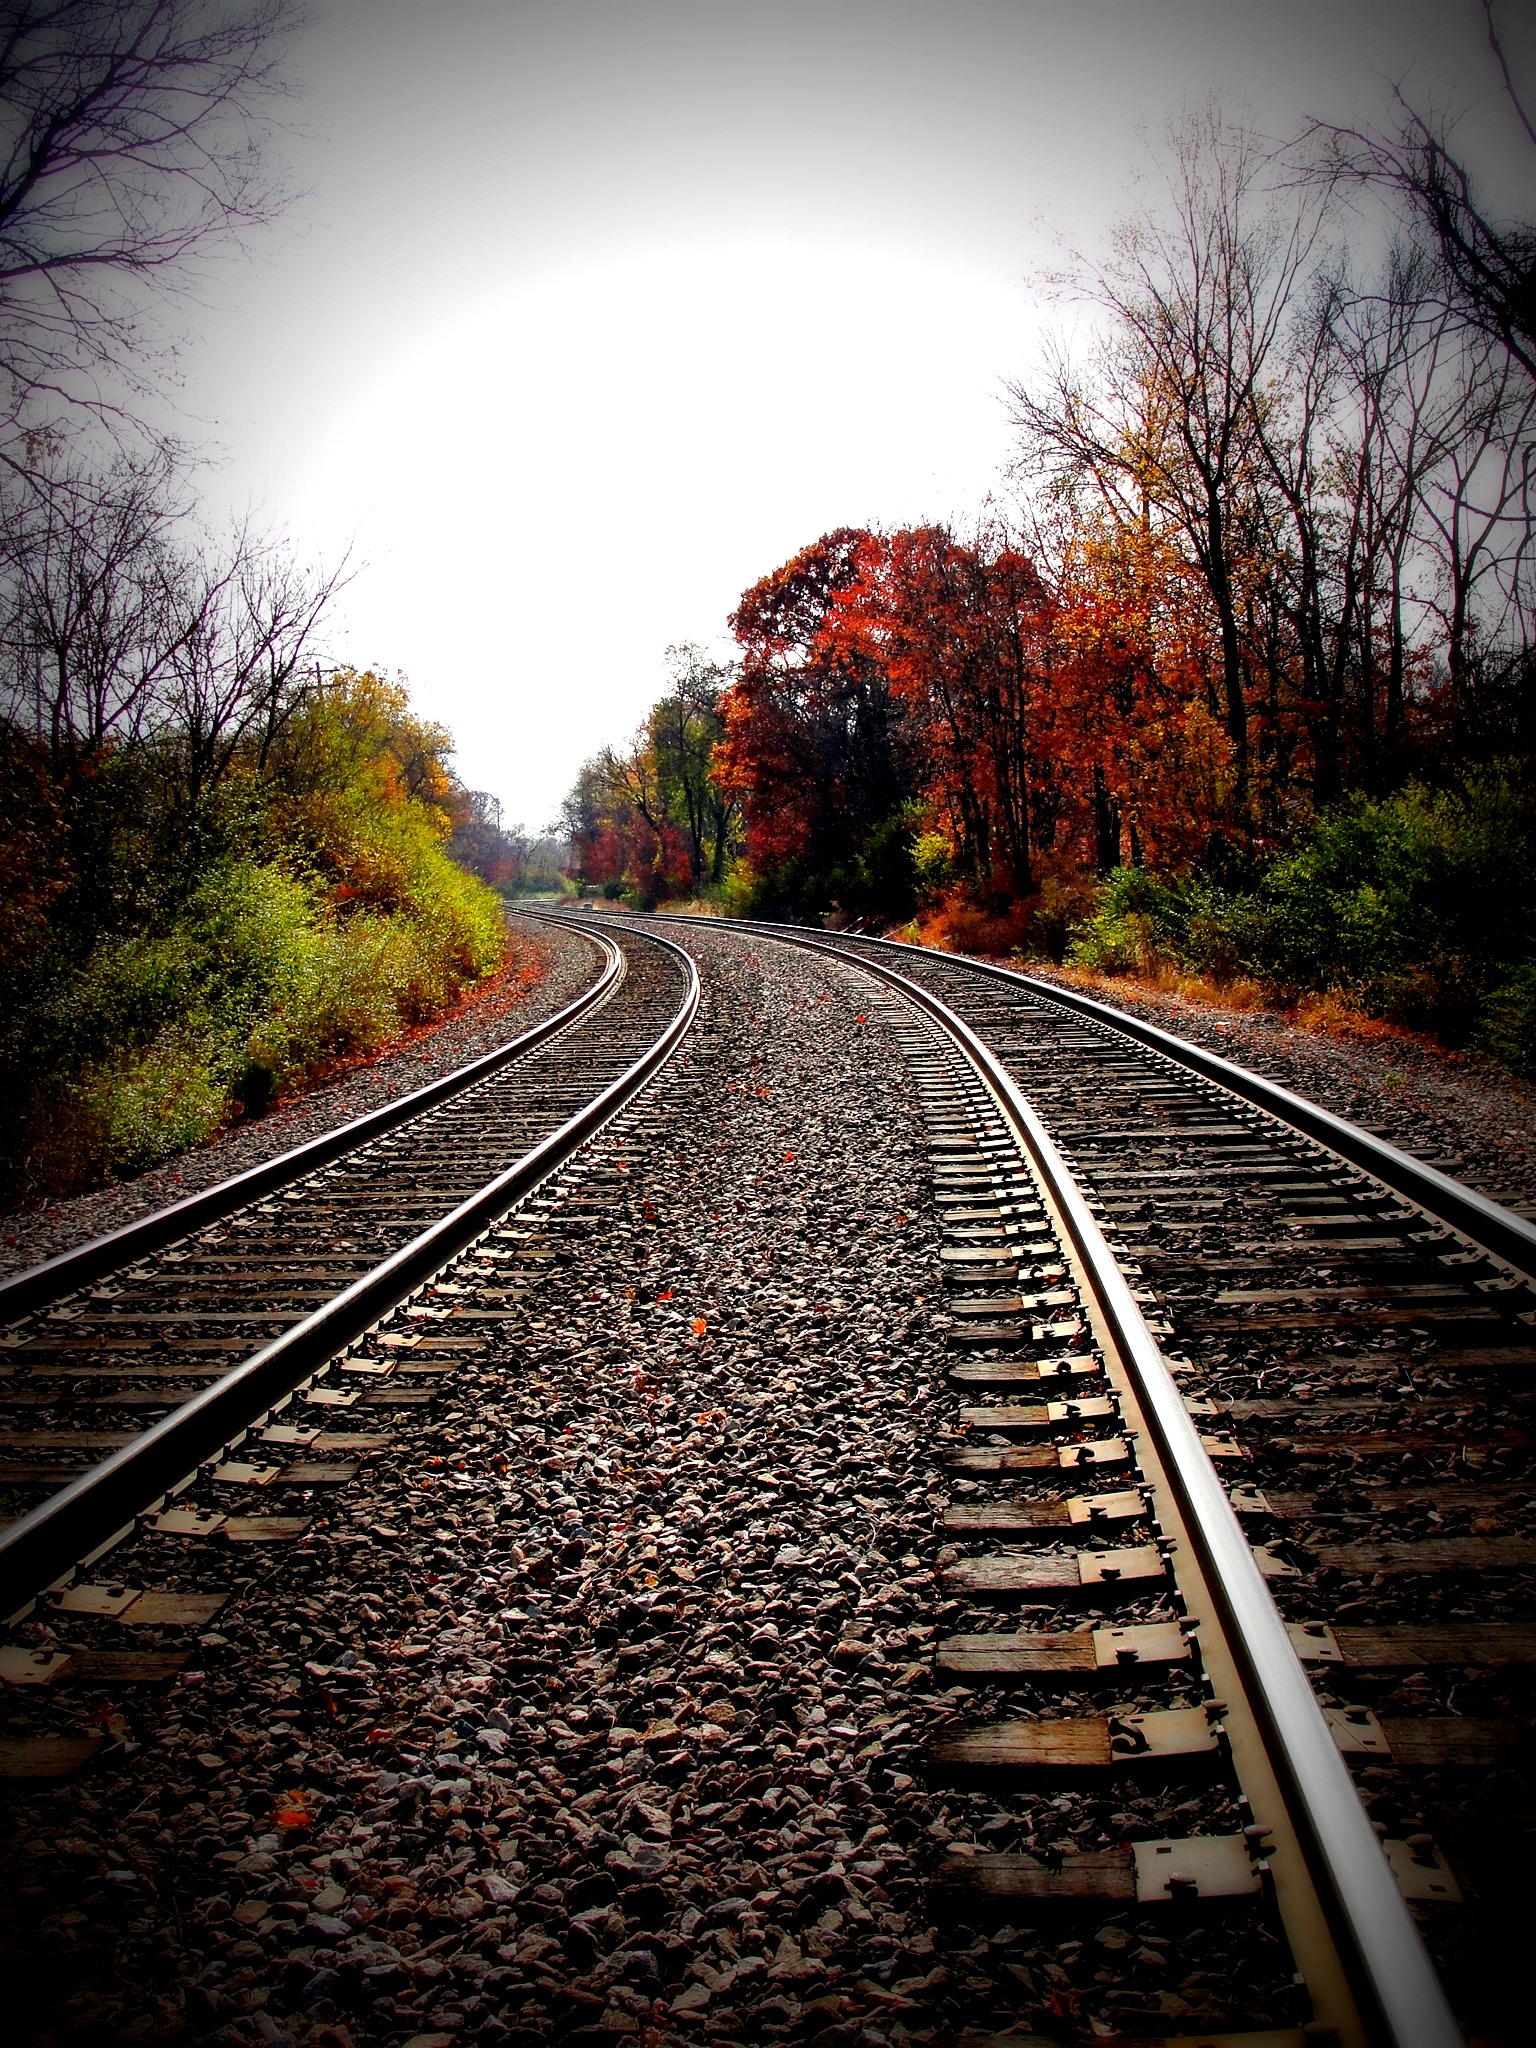 train tracks | All I've Got is a Photograph...